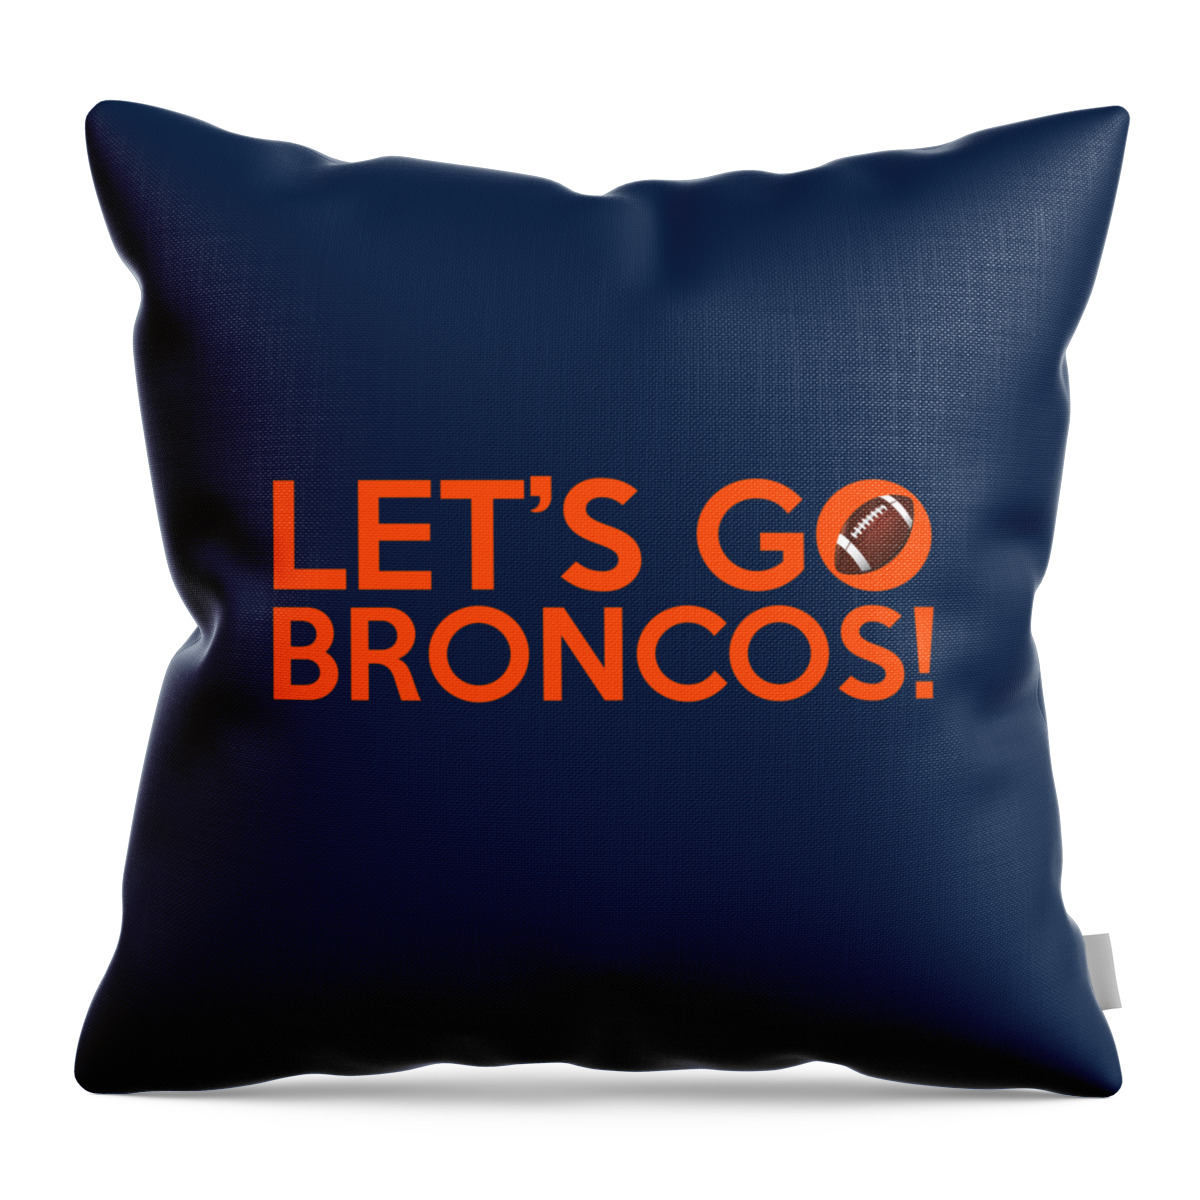 Denver Broncos Throw Pillow featuring the painting Let's Go Broncos by Florian Rodarte